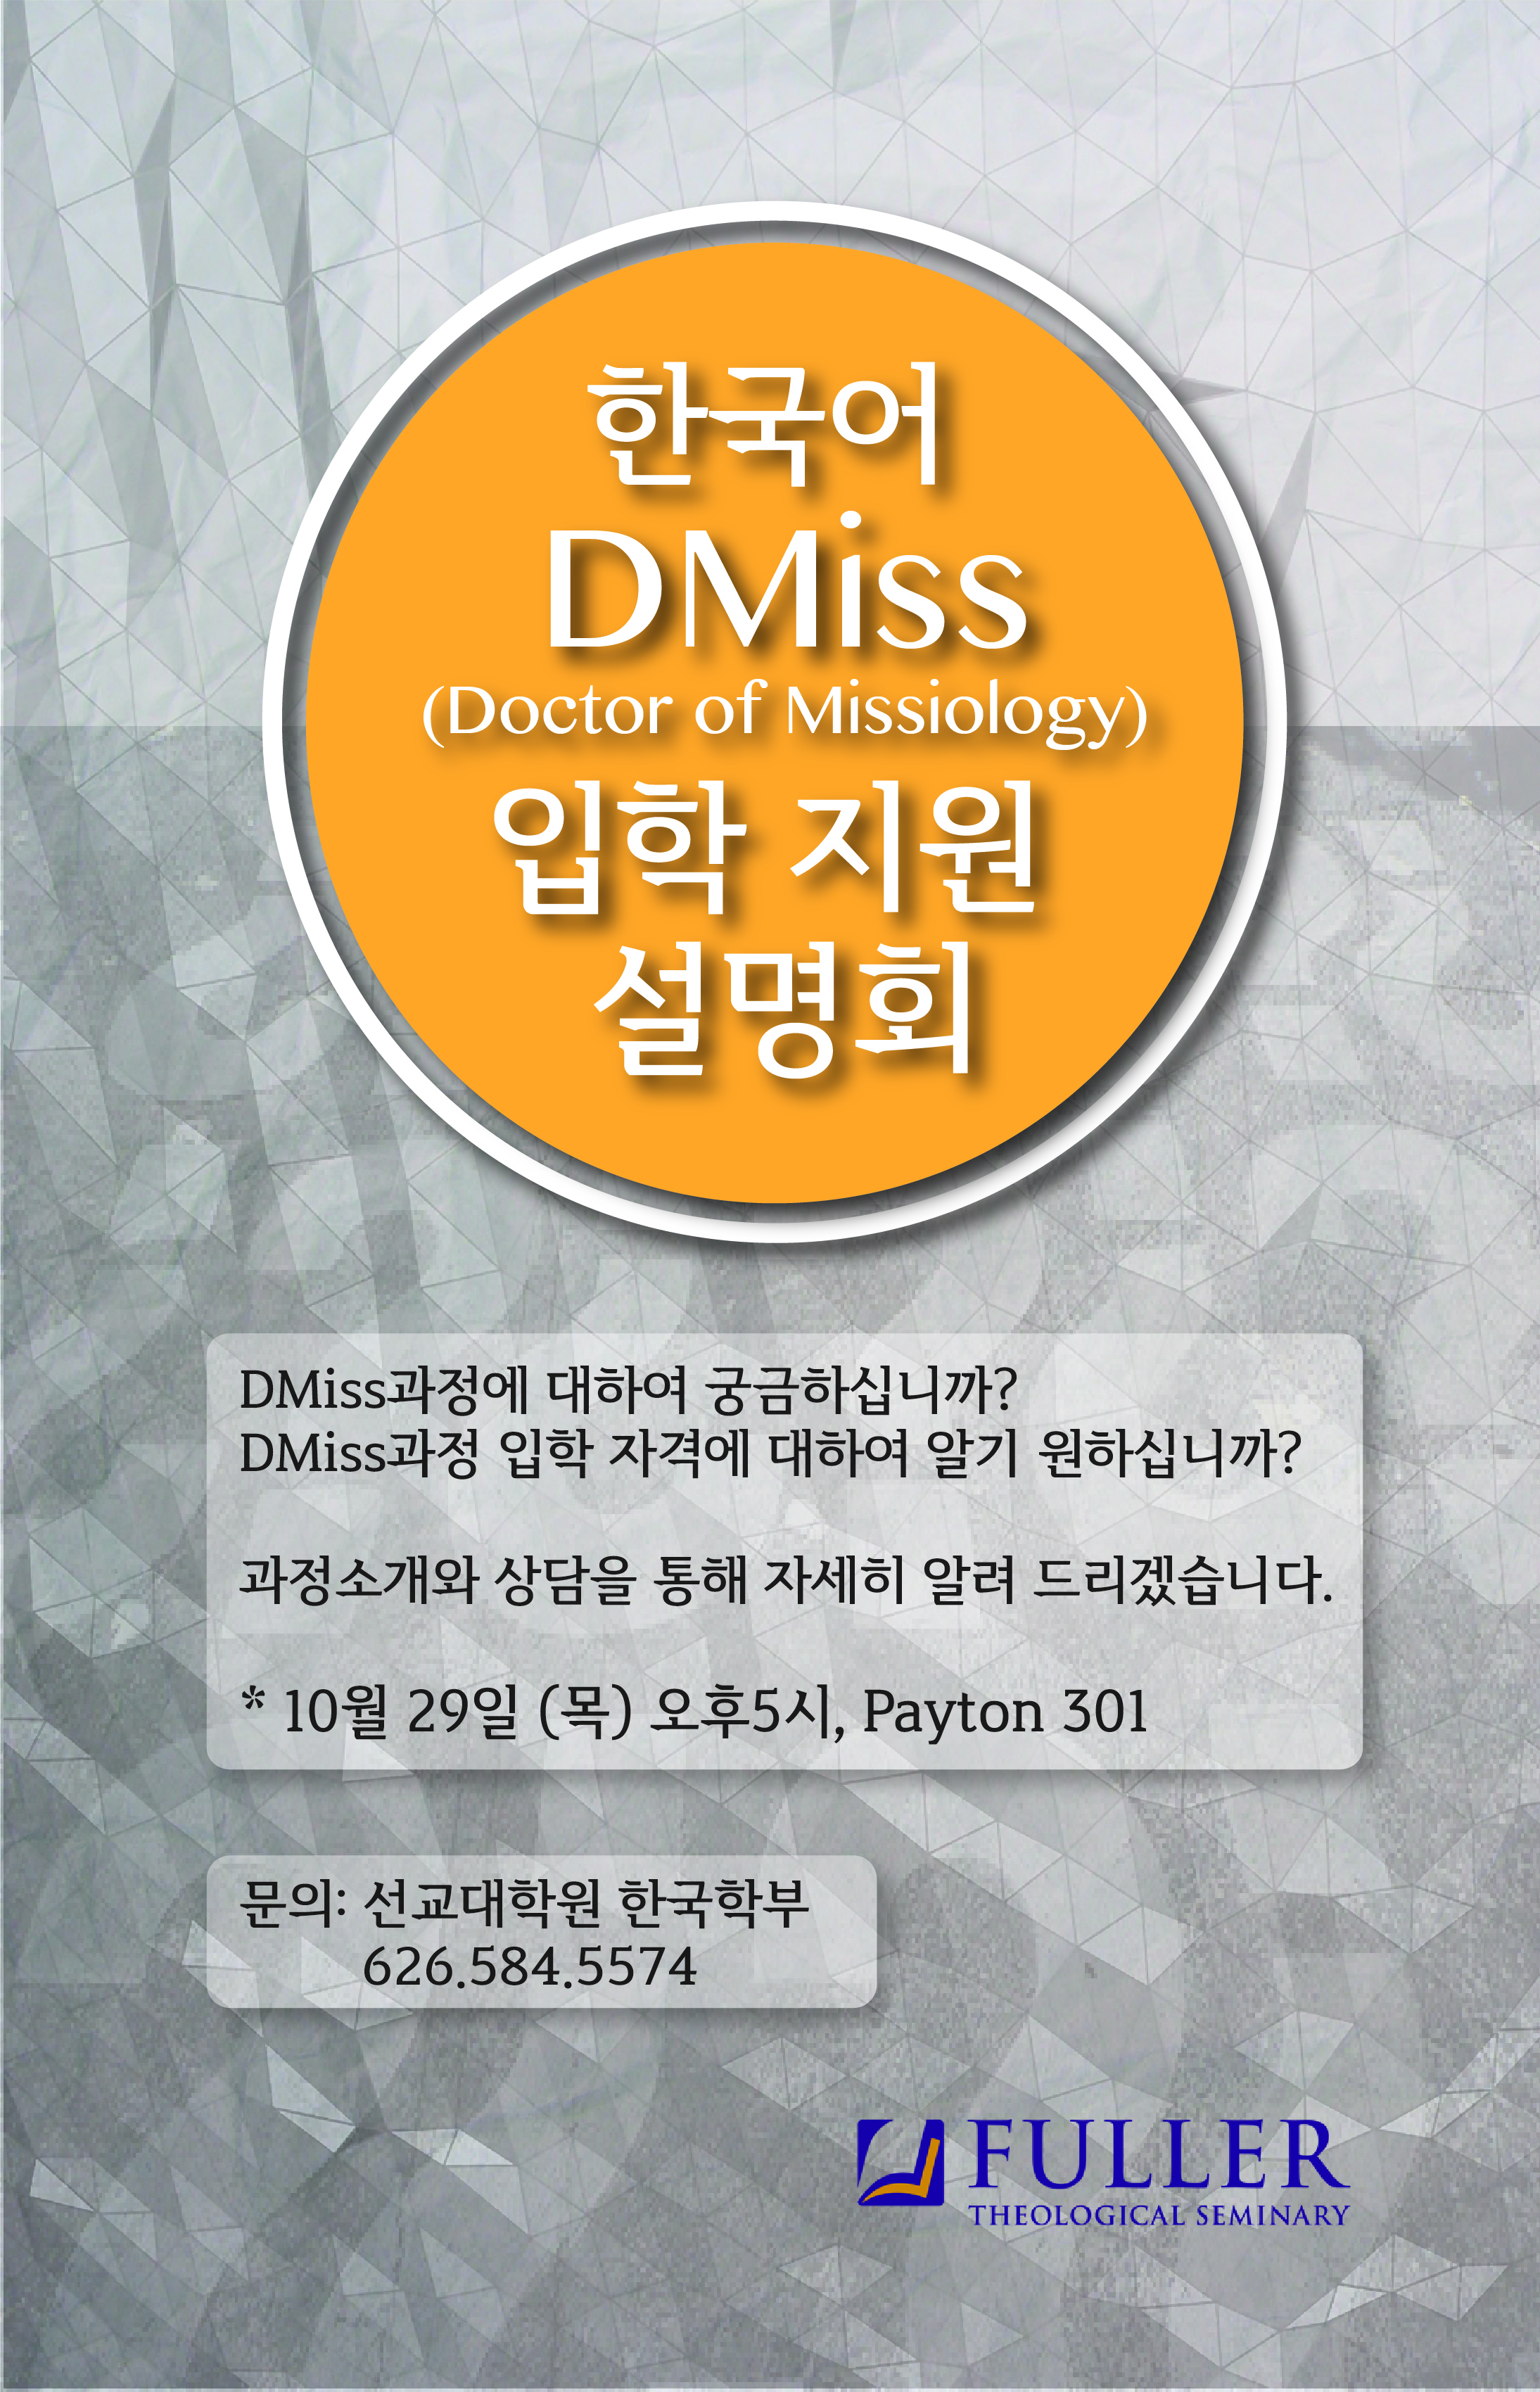 DMiss Info Meeting4.jpg